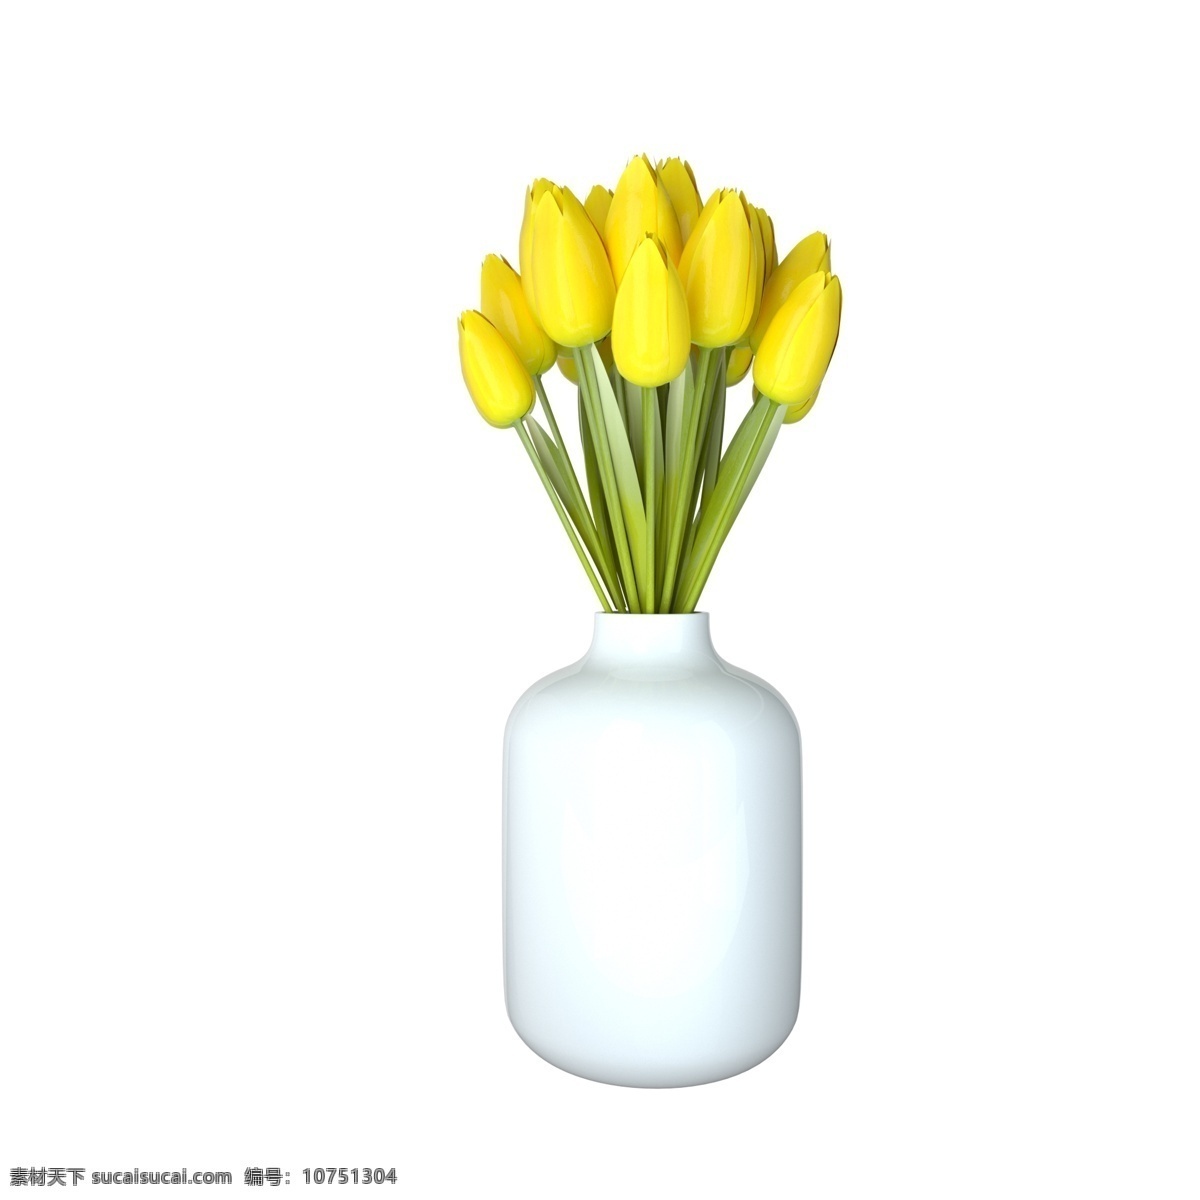 3d 植物 盆景 花卉 c4d 写实 家居 家具 家居生活馆 家装节 花朵 装饰 白色花瓶 瓷花瓶